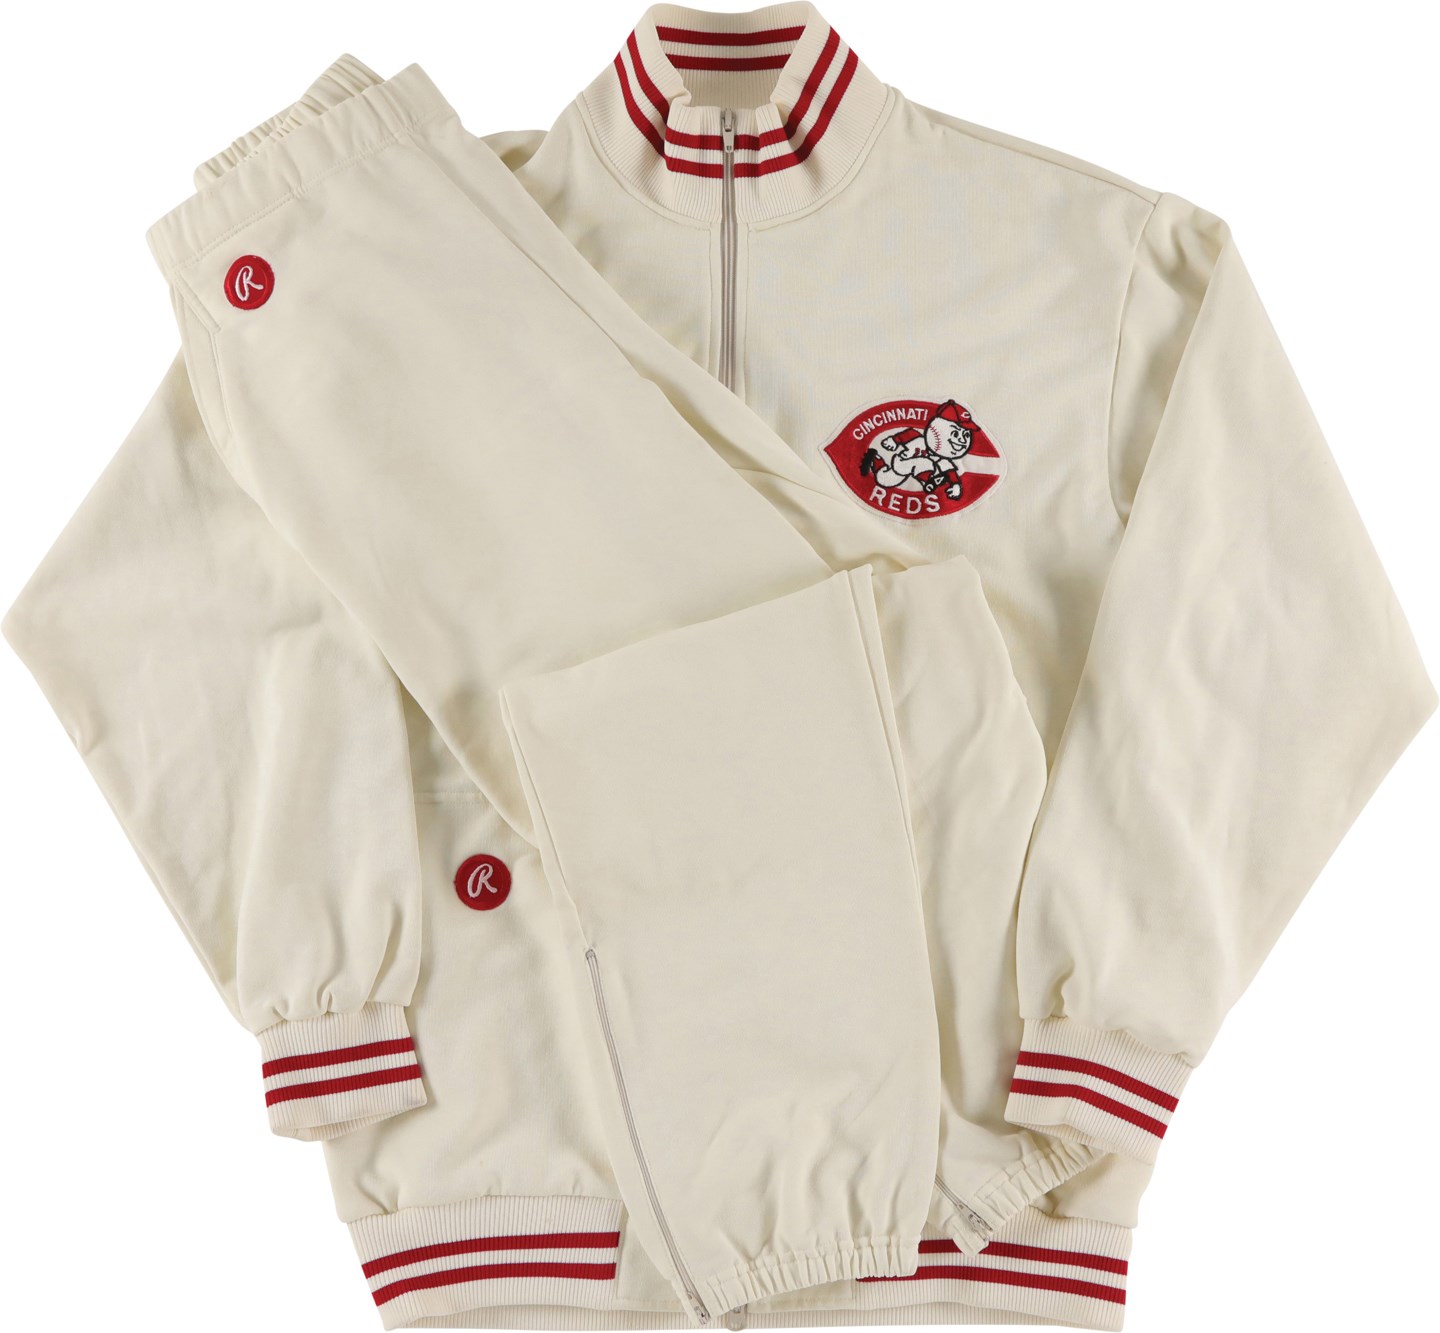 - 1978 Cincinnati Reds Tour of Japan Warmup Suit